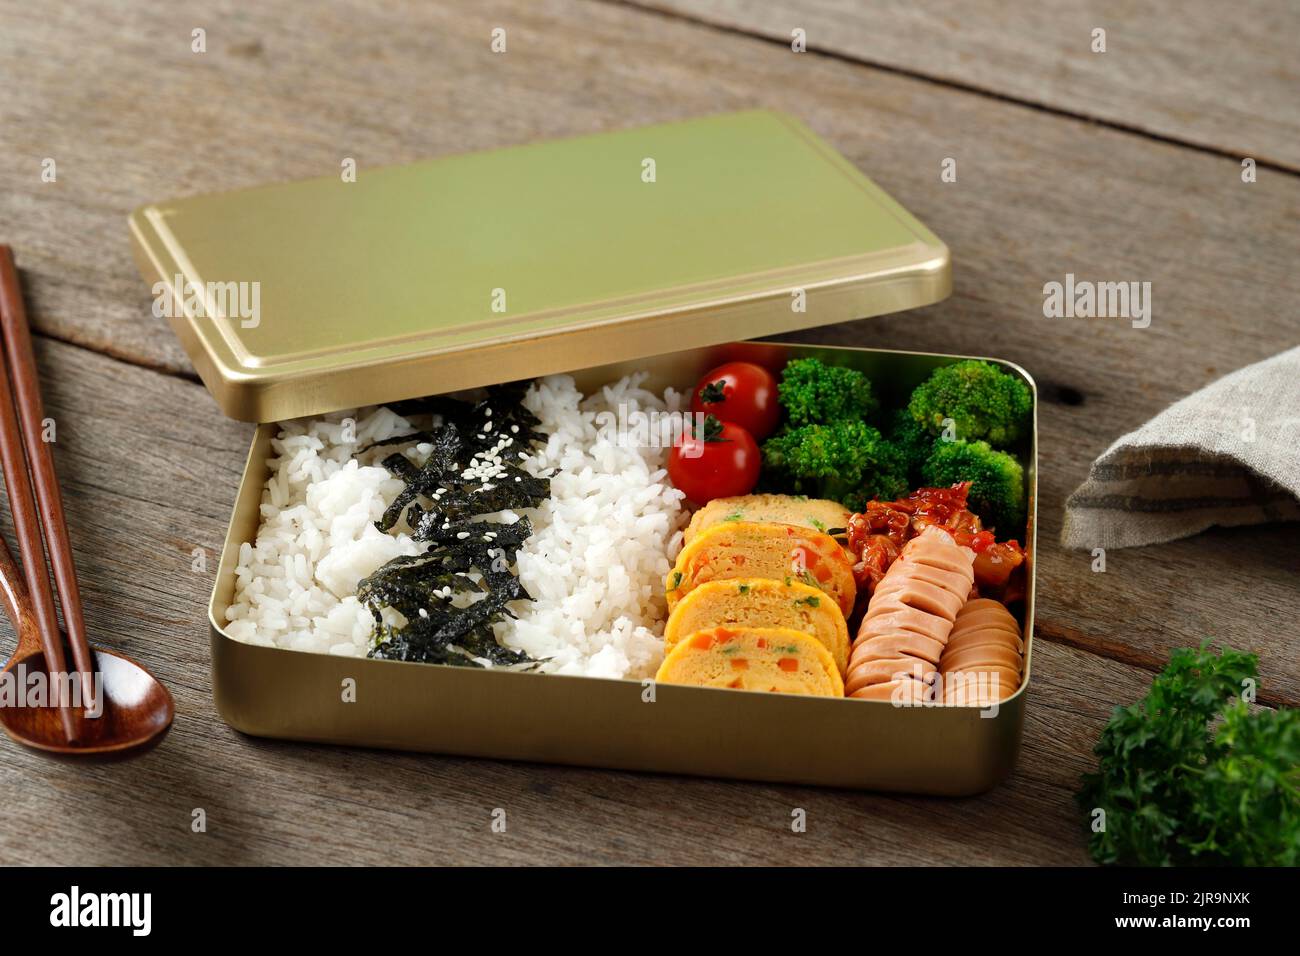 Korean food photo: Dosirak (Korean lunch box) on